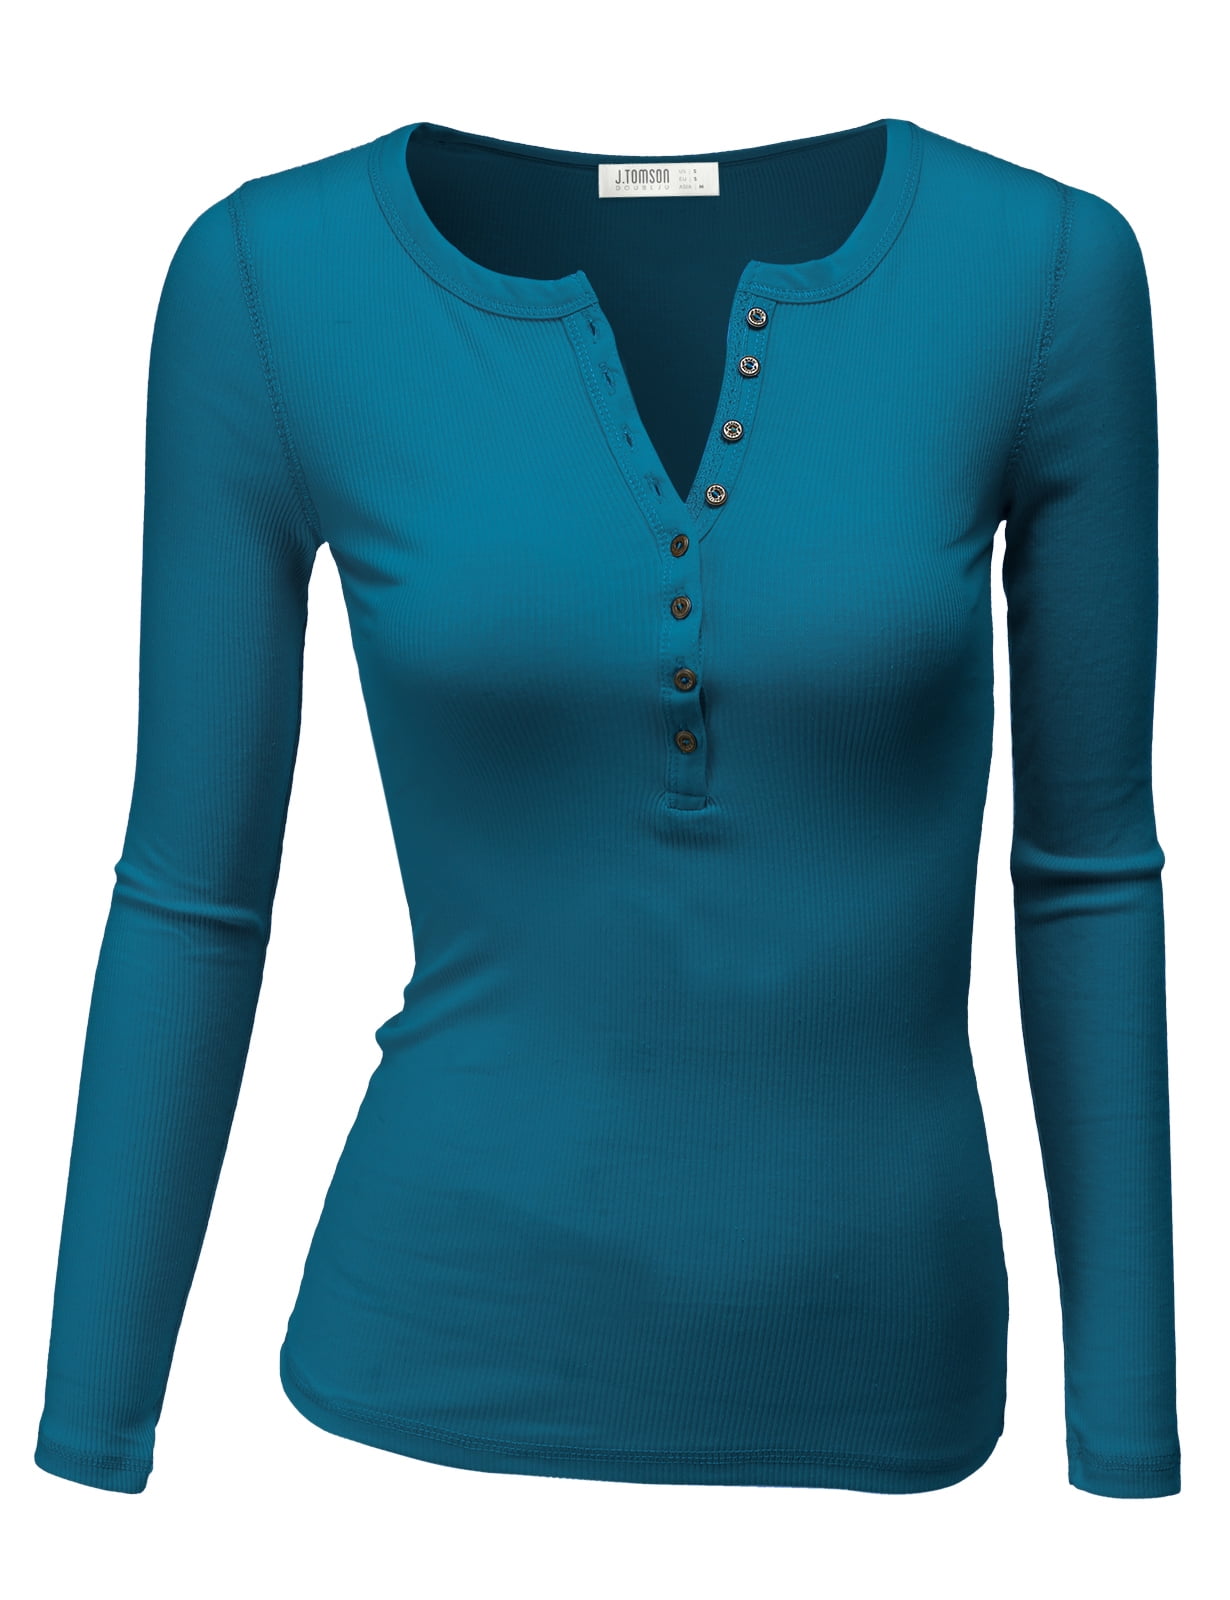 Doublju - Doublju Women's Womens Henley Shirts Round Neck Long Sleeve ...